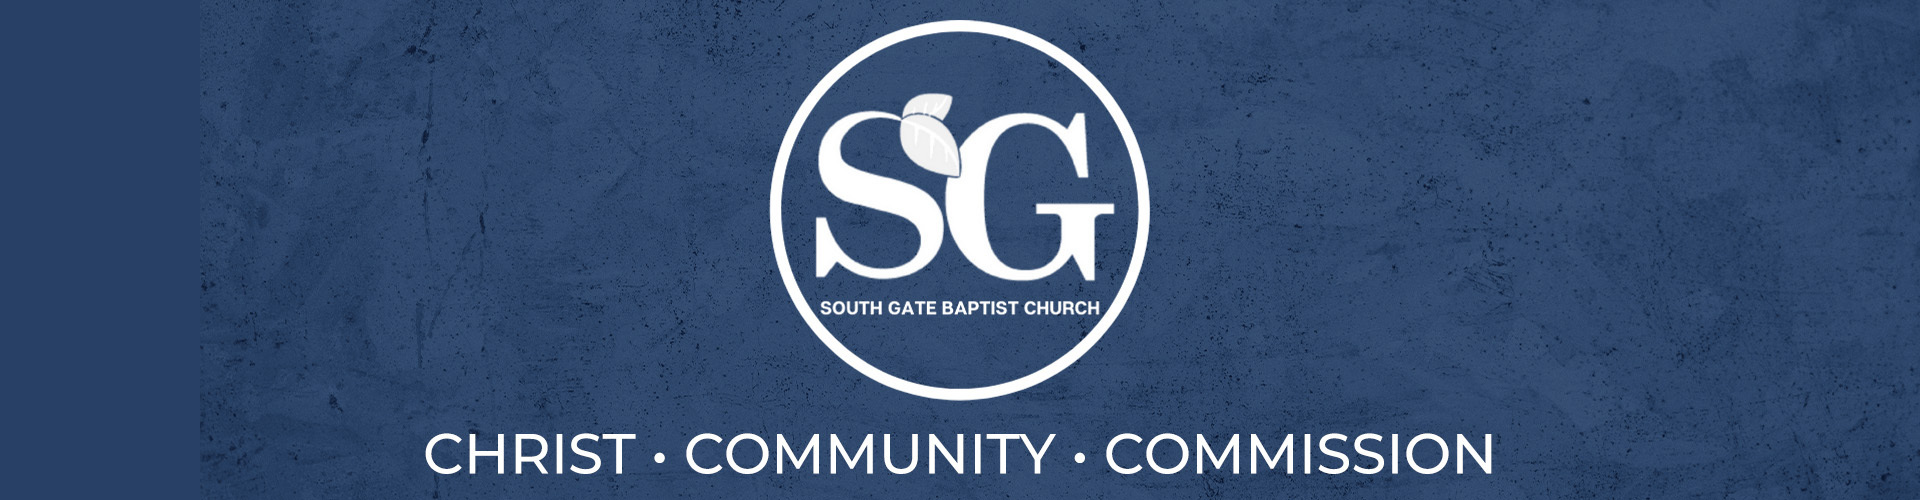 South Gate Baptist Church